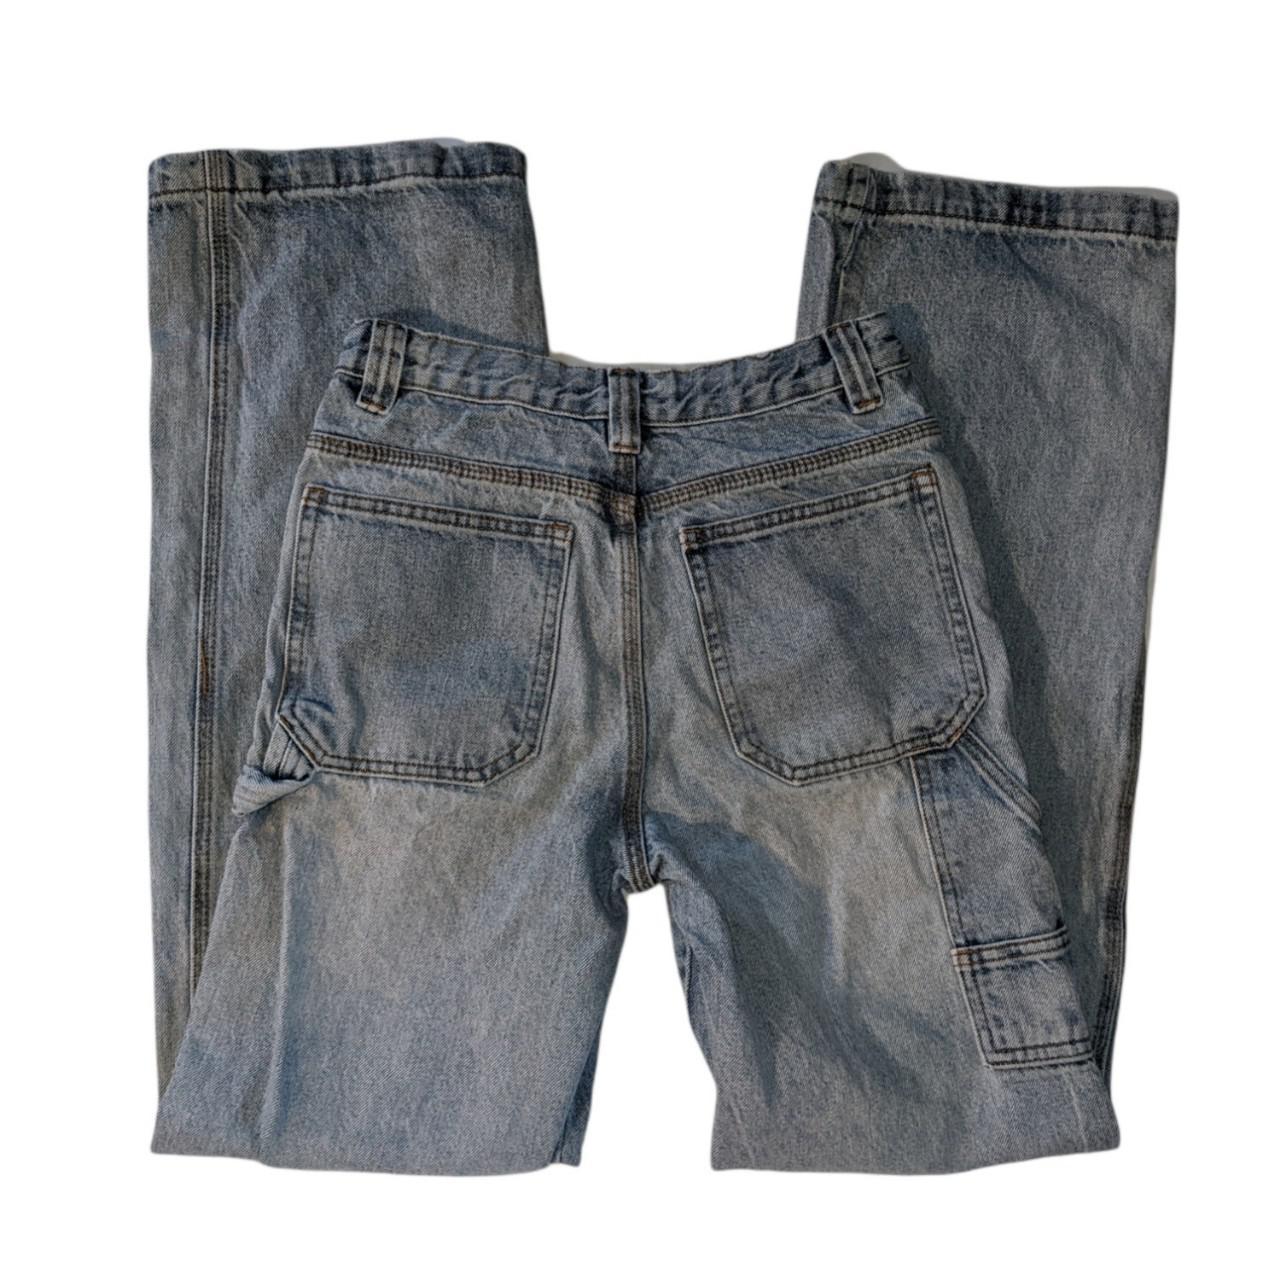 Brandy Melville Feanne jeans!! 💗 Details 💗 -A... - Depop